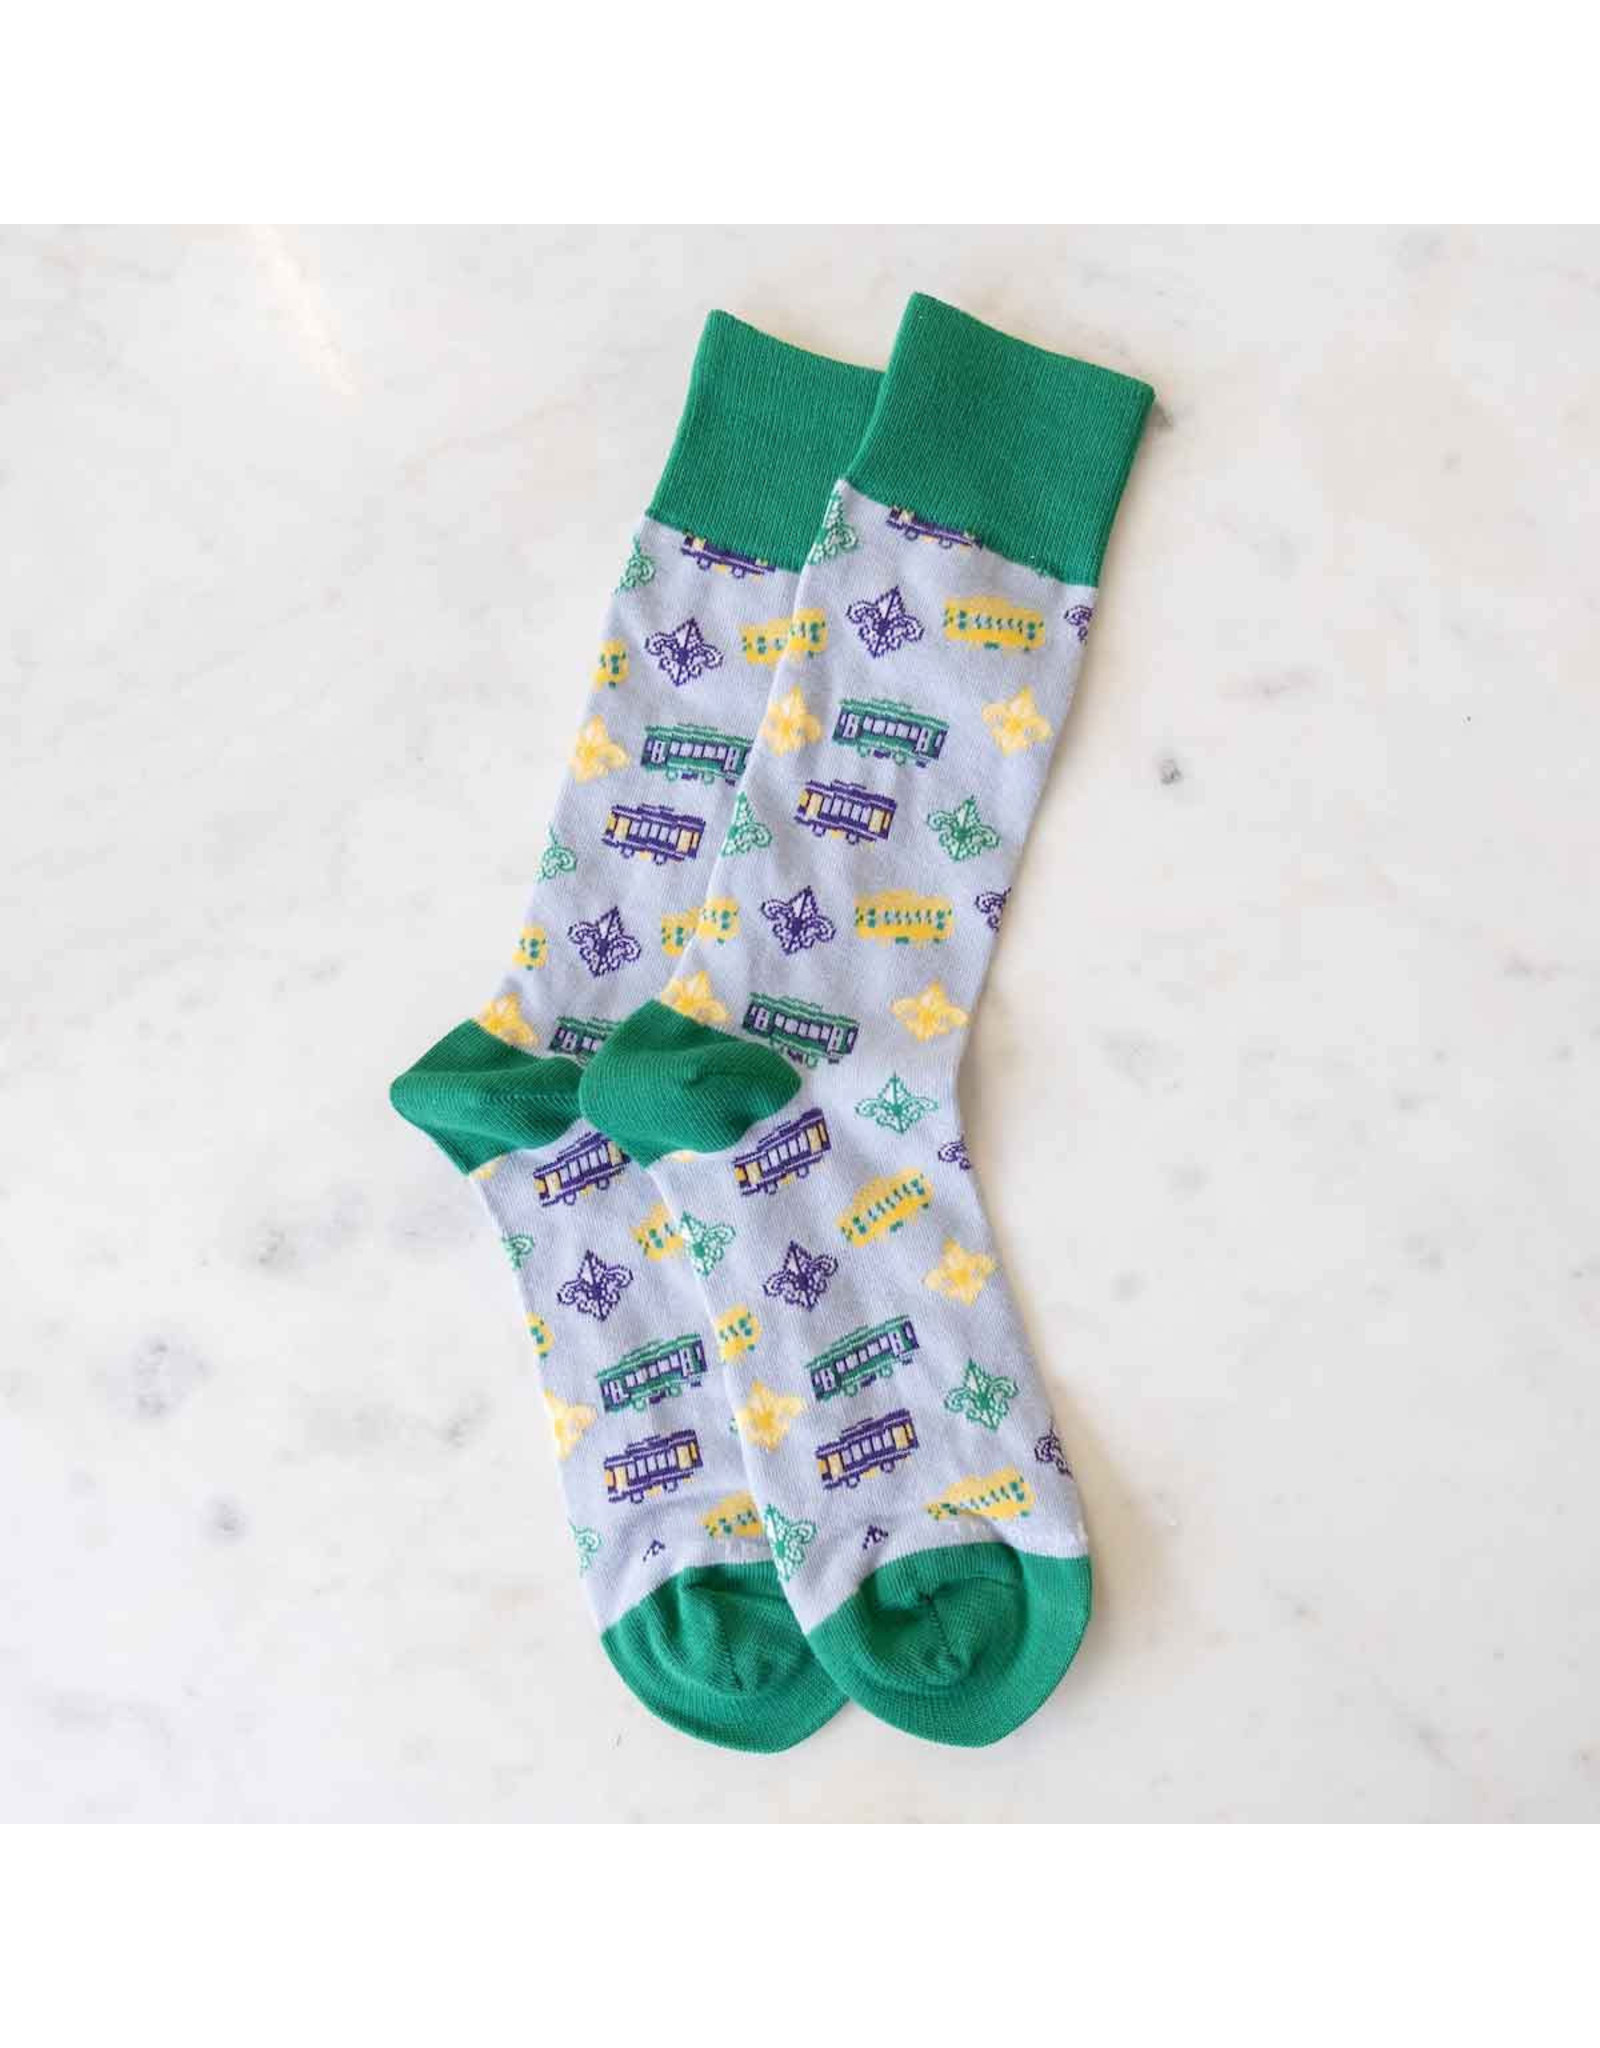 The Royal Standard Men's Streetcar Socks